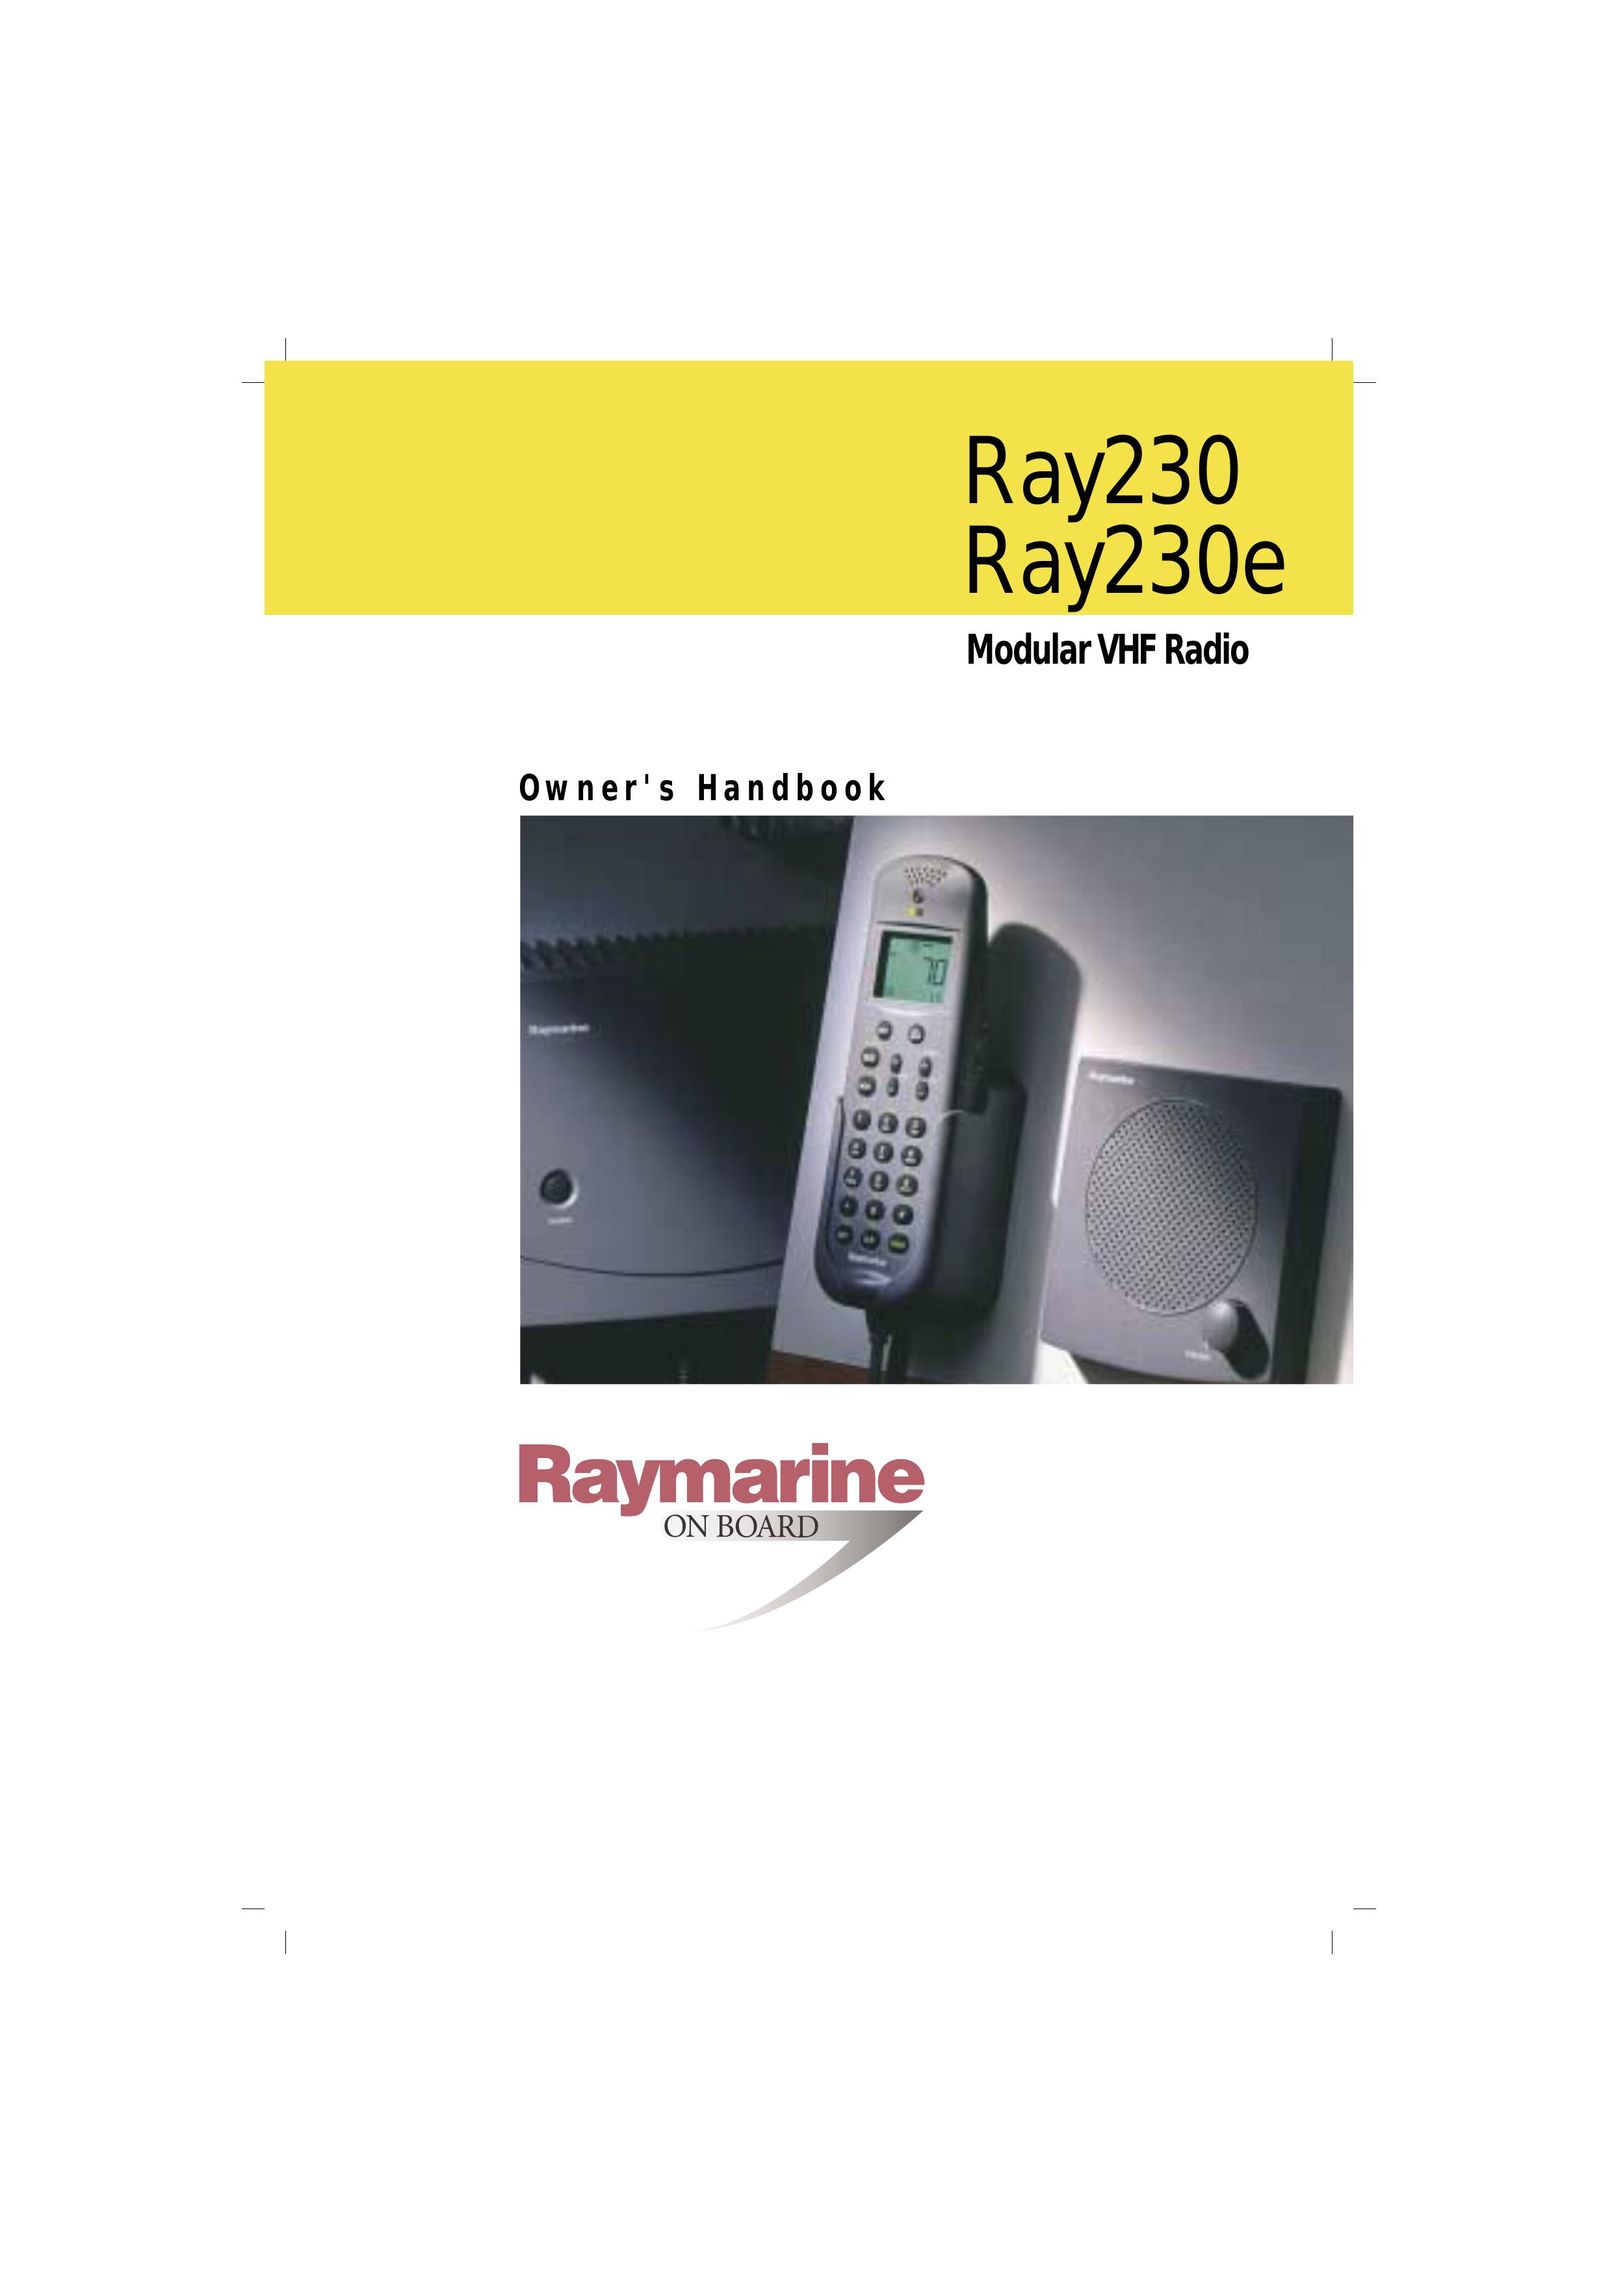 Raymarine Ray230 Portable Radio User Manual